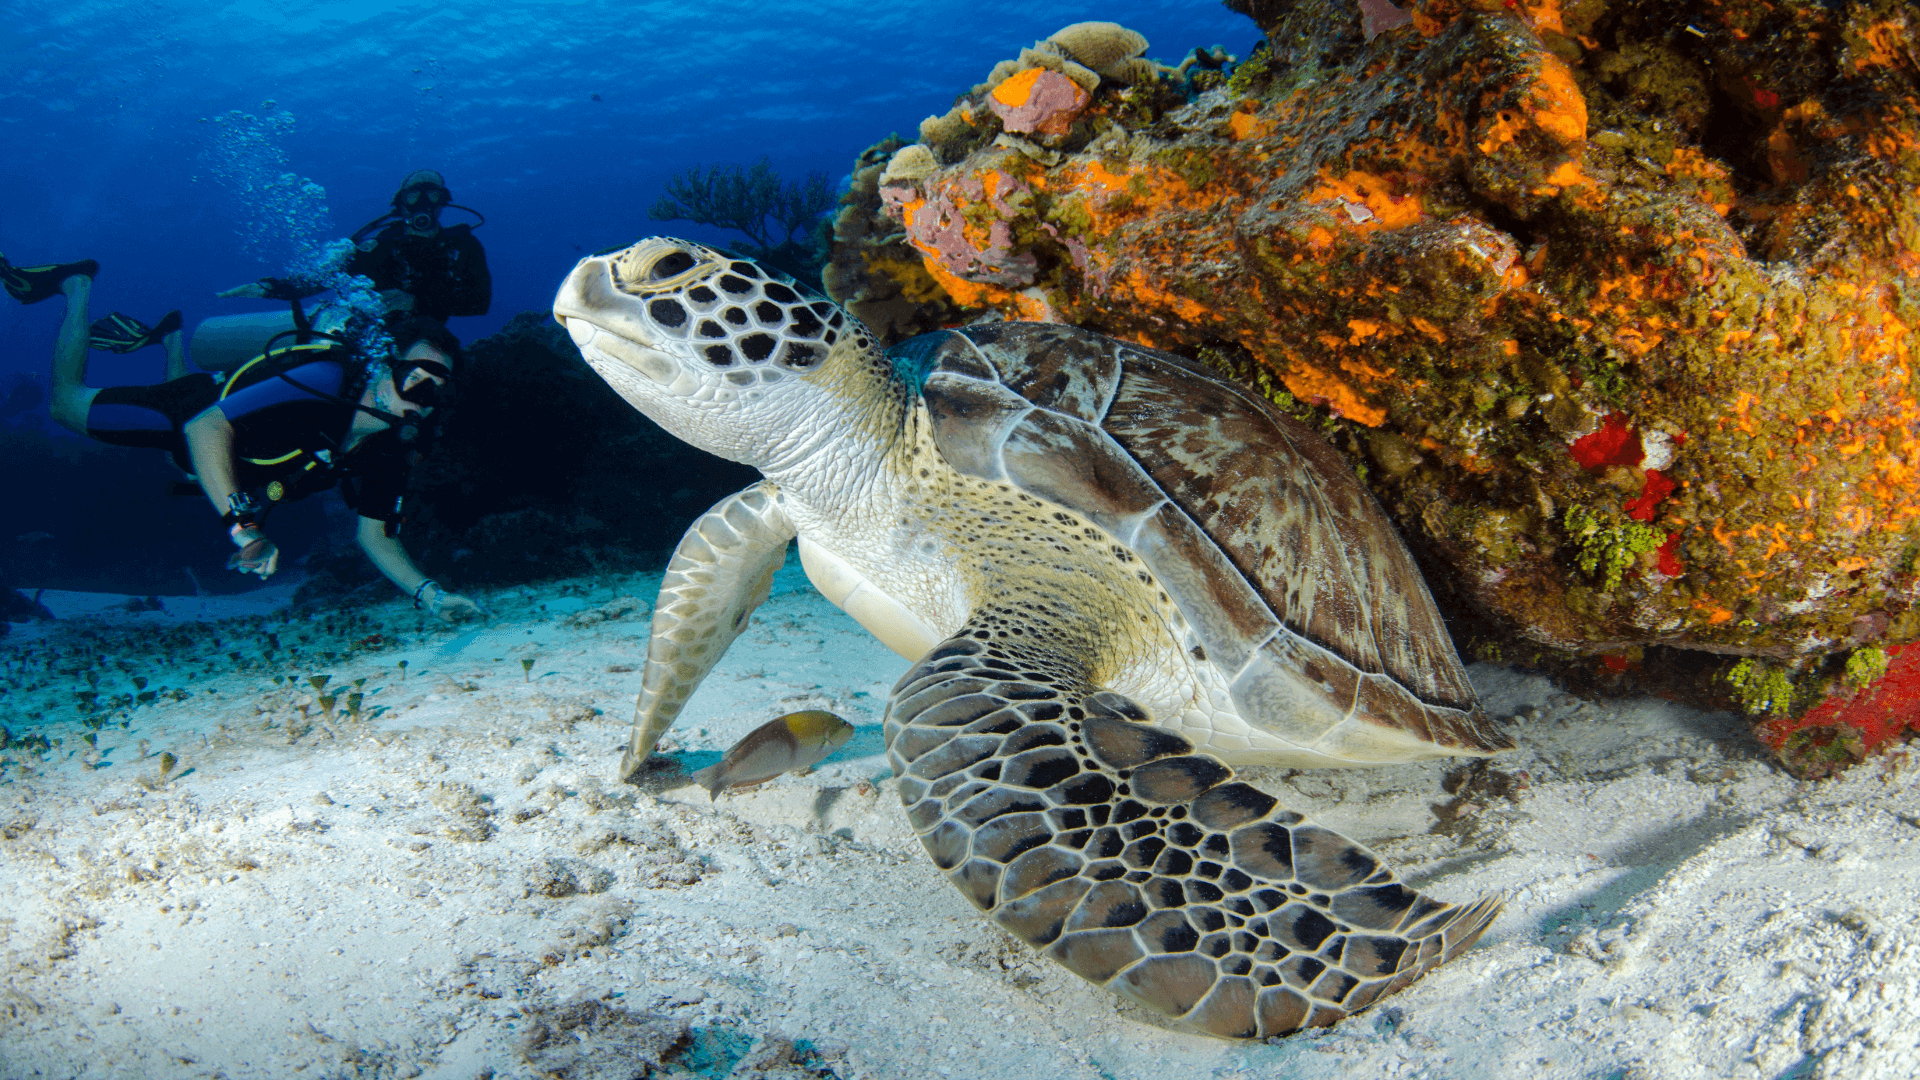 Scuba diving with sea turtles is a popular Galápagos pastime. Photo: Leonardo Lamas